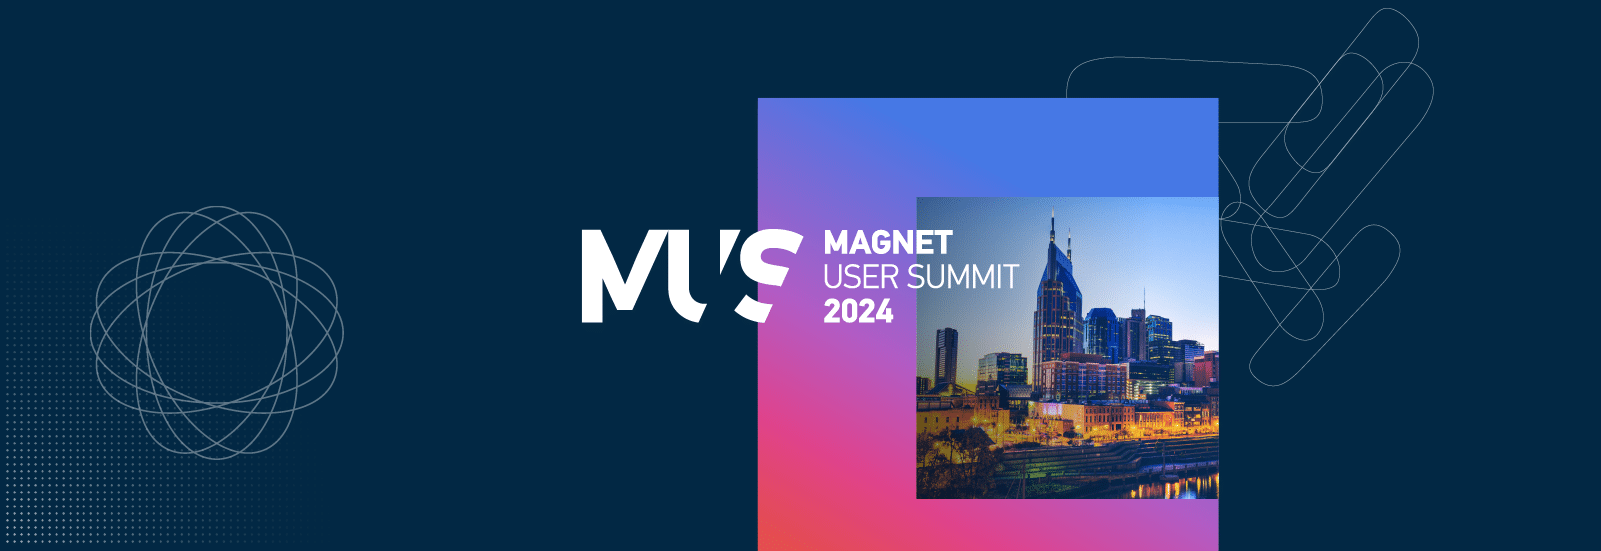 Magnet User Summit 2024